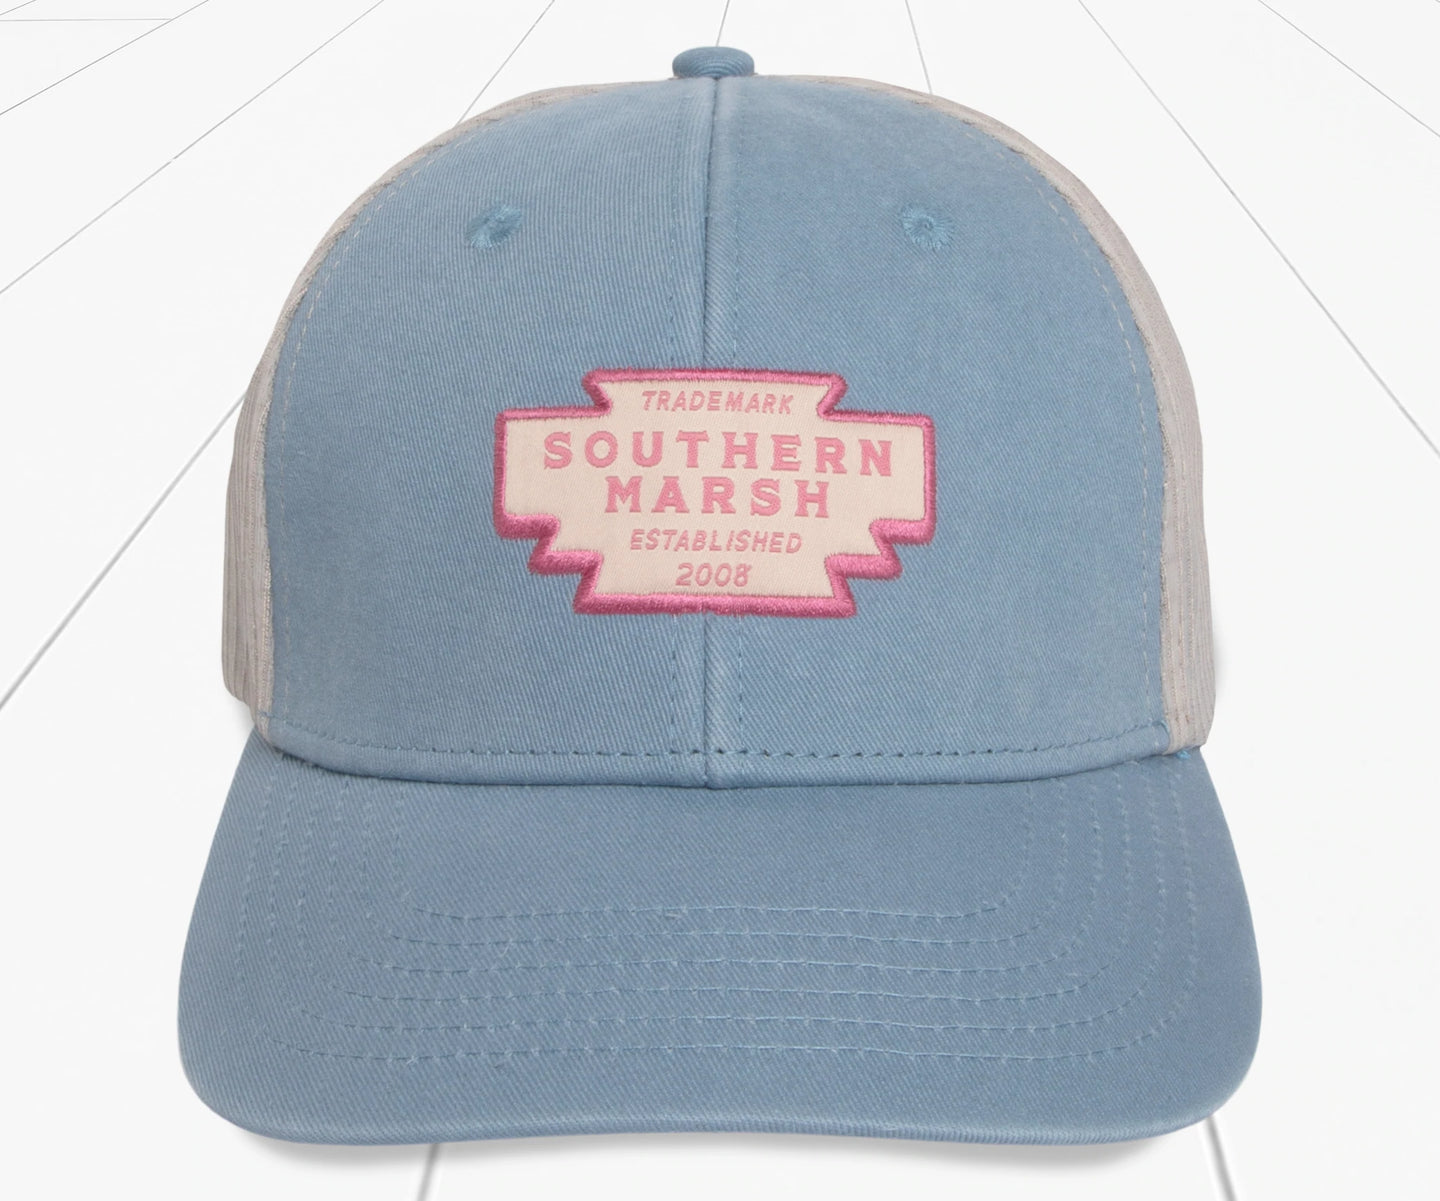 Southern Marsh Trucker Hat- Santa Fe